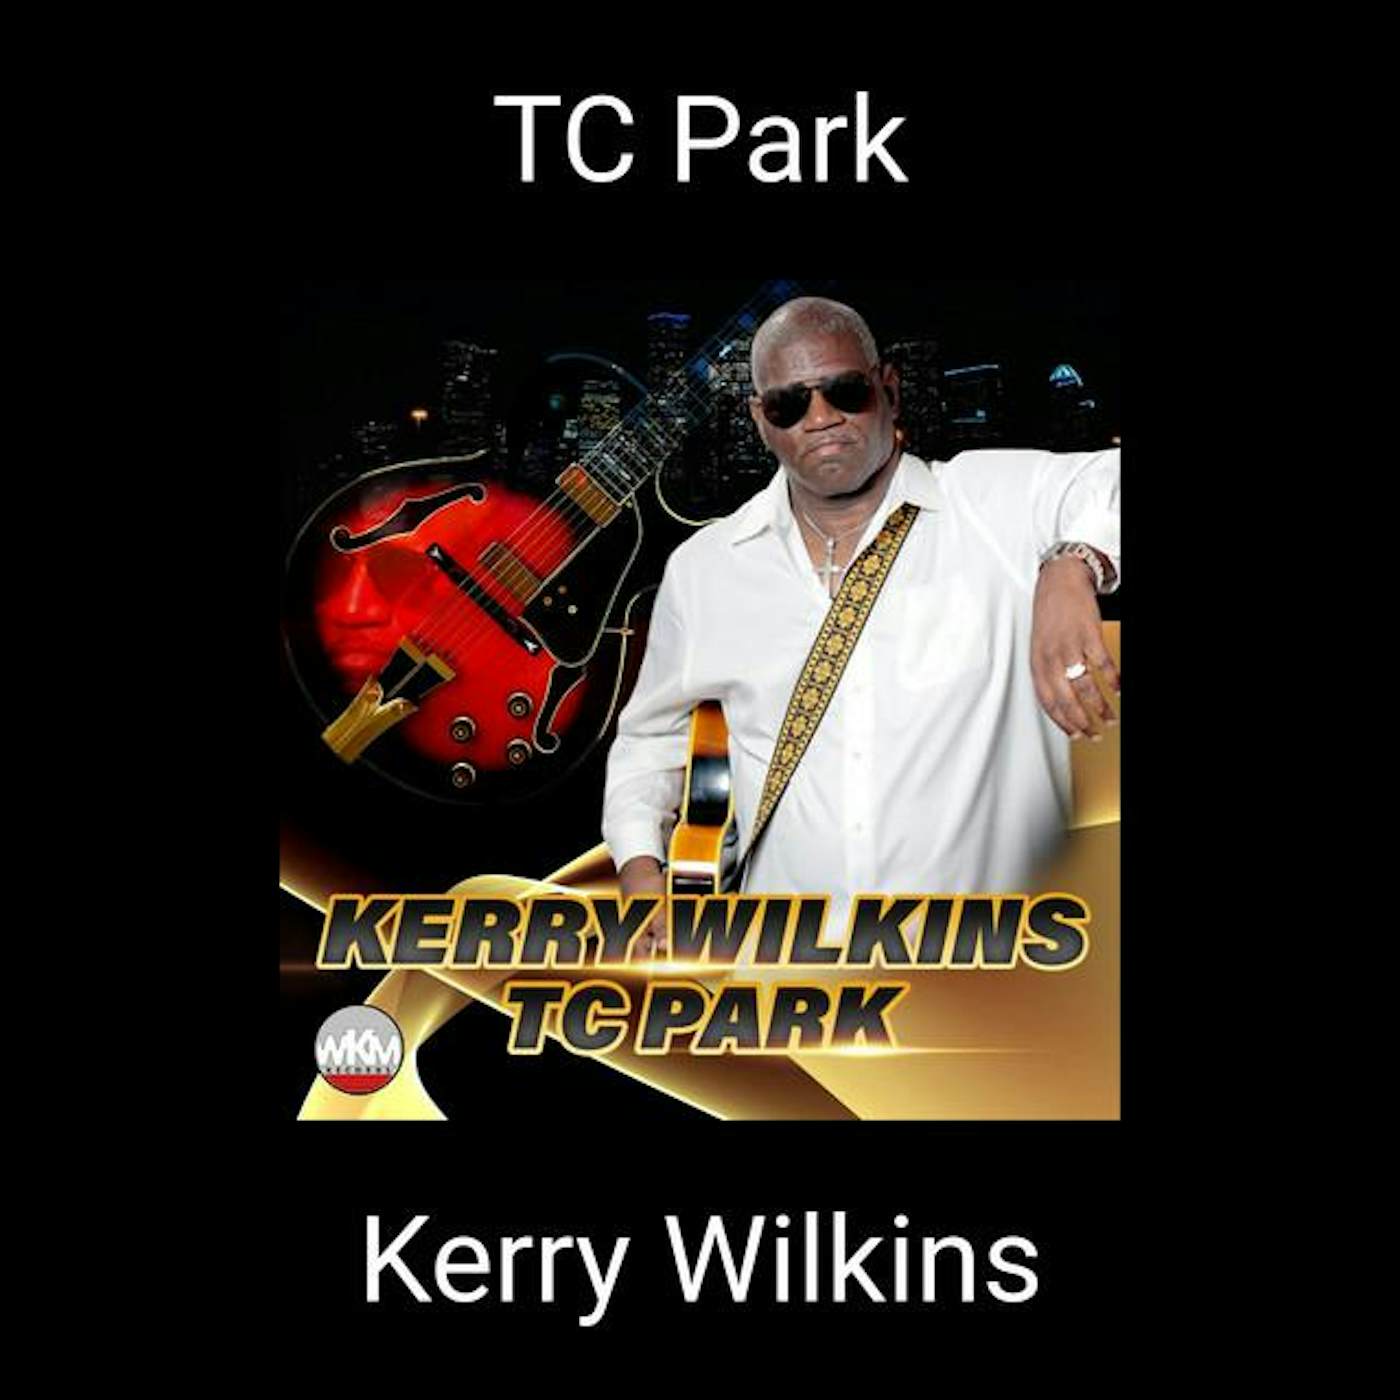 Kerry Wilkins